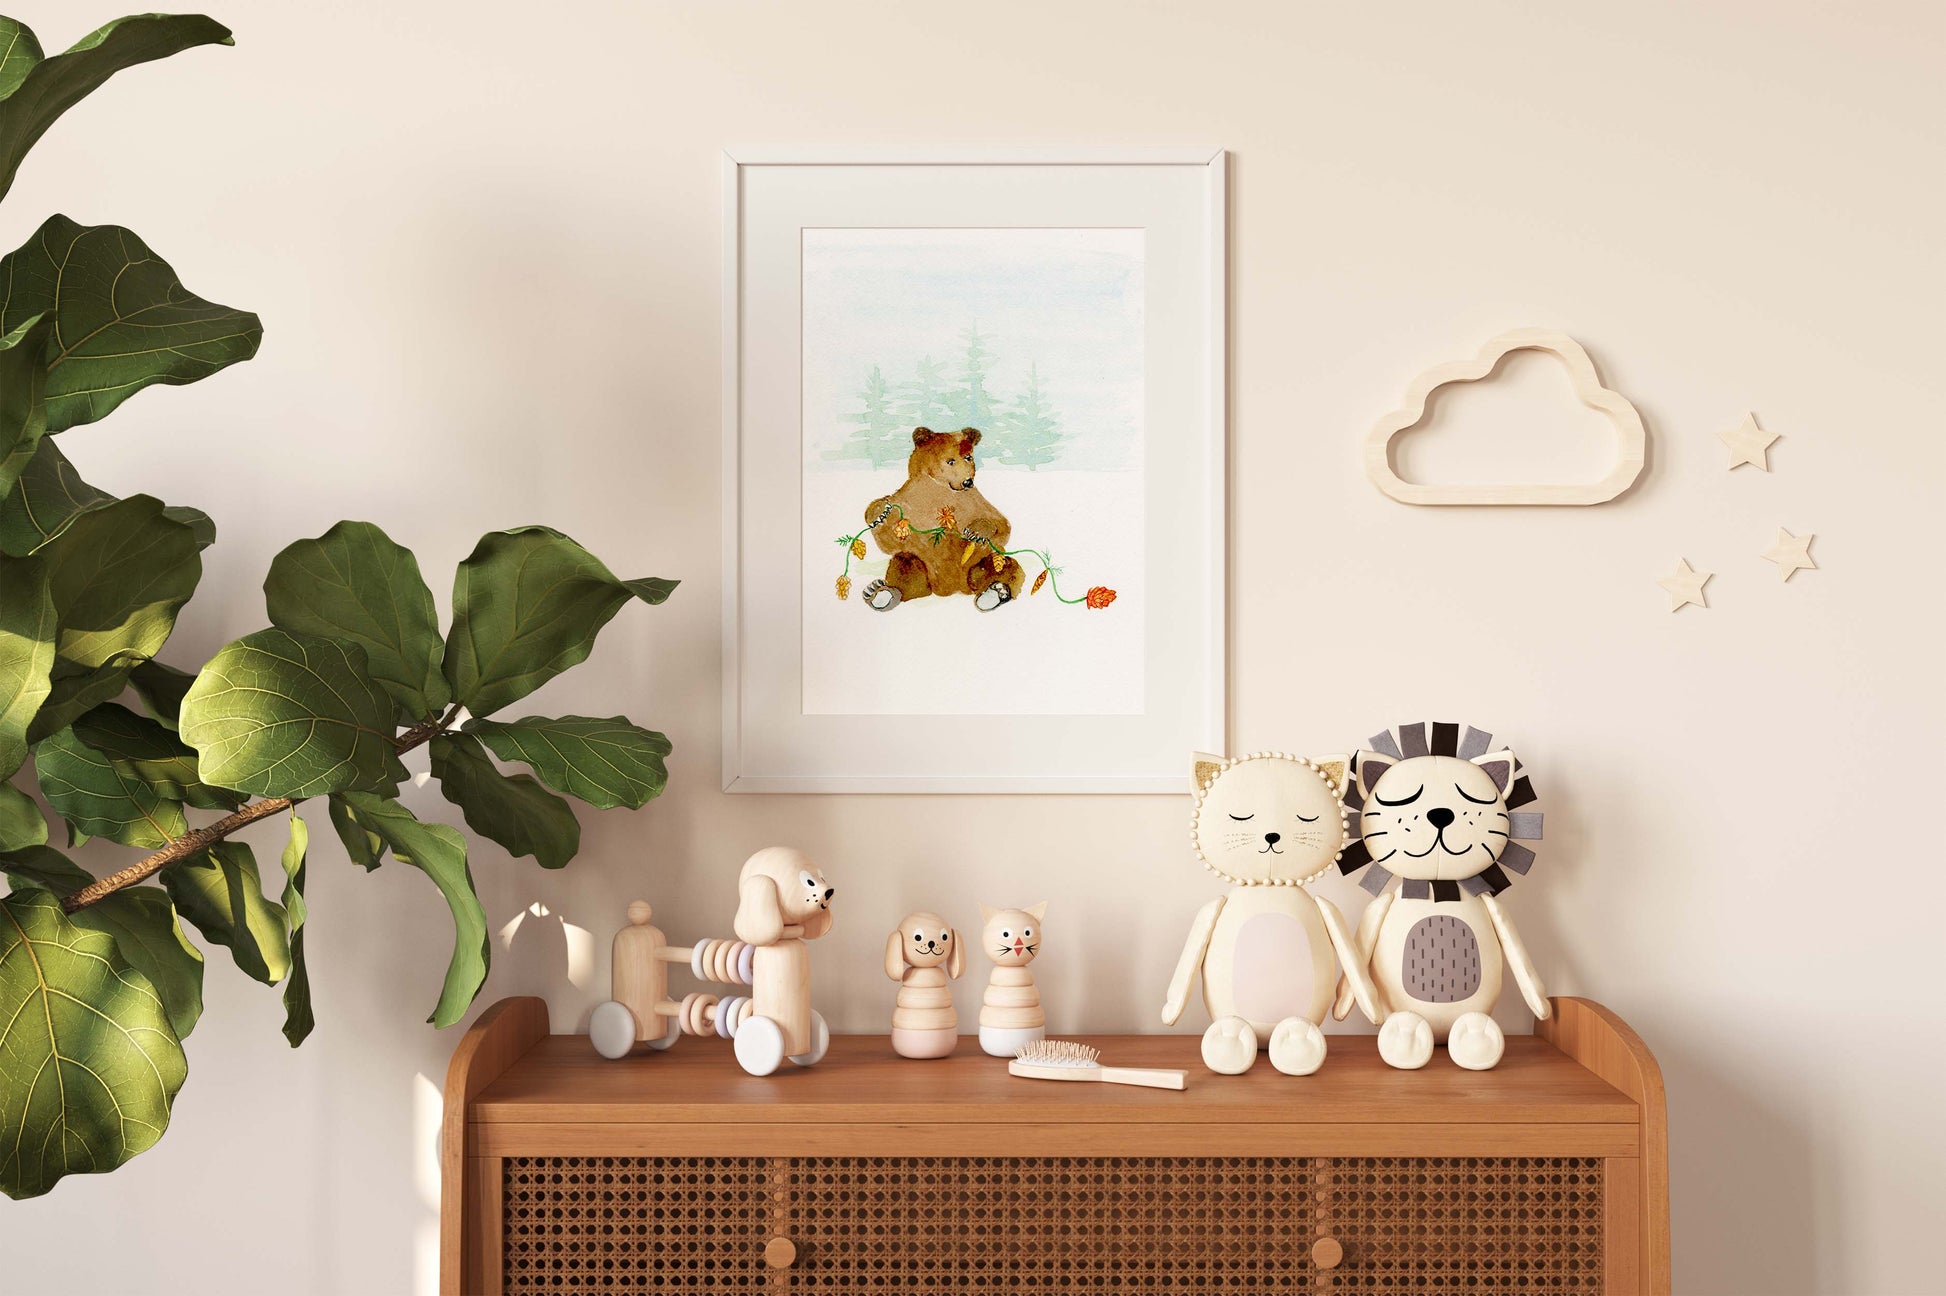 Wall Art Print Teddy Bear, Gifts & Merchandise